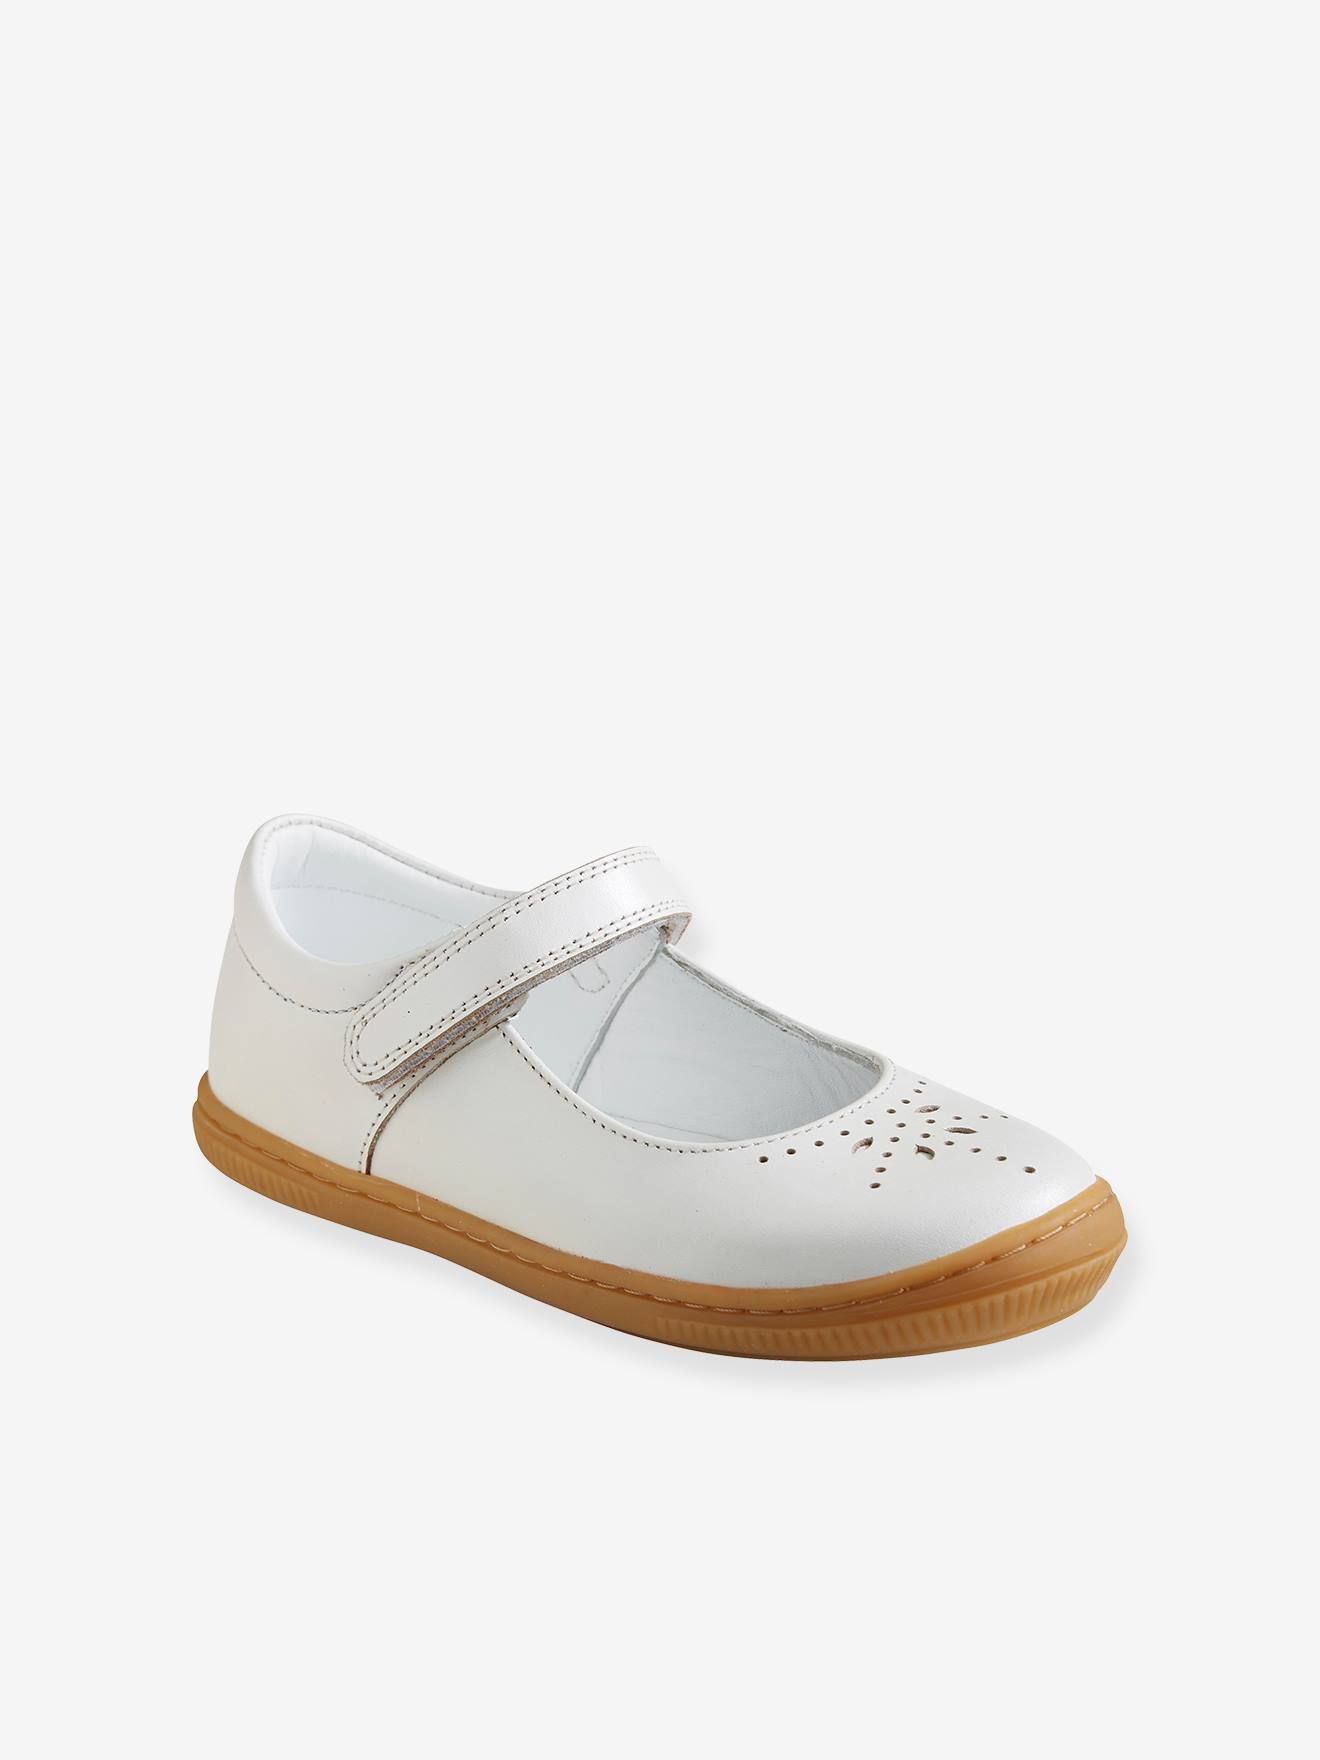 Zapatos de piel para niña especial autonomía blanco claro - Vertbaudet